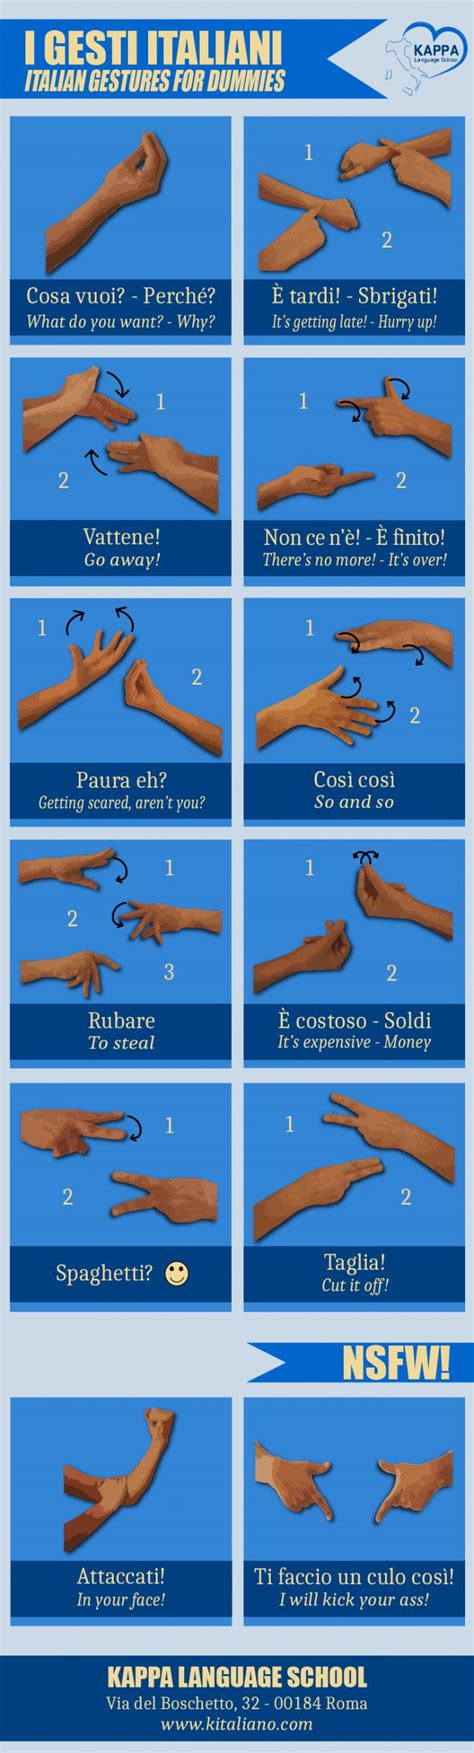 Learn Italian Words Italian Gestures For Dummies Kappa Language